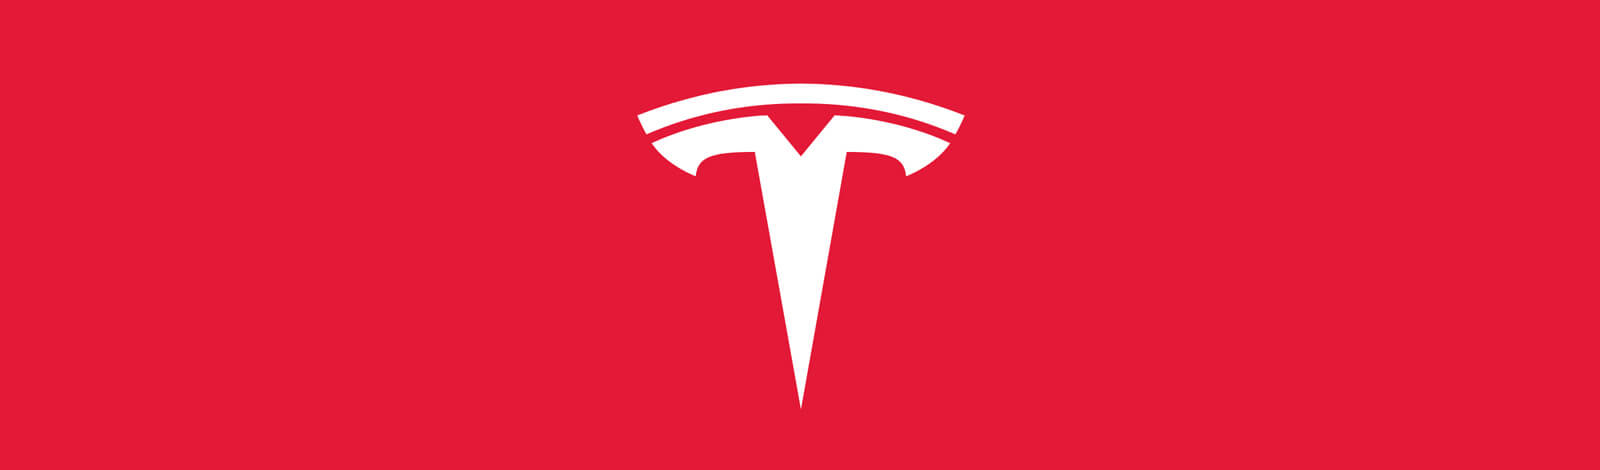 Tesla hires Apple exec to lead self-drive tech